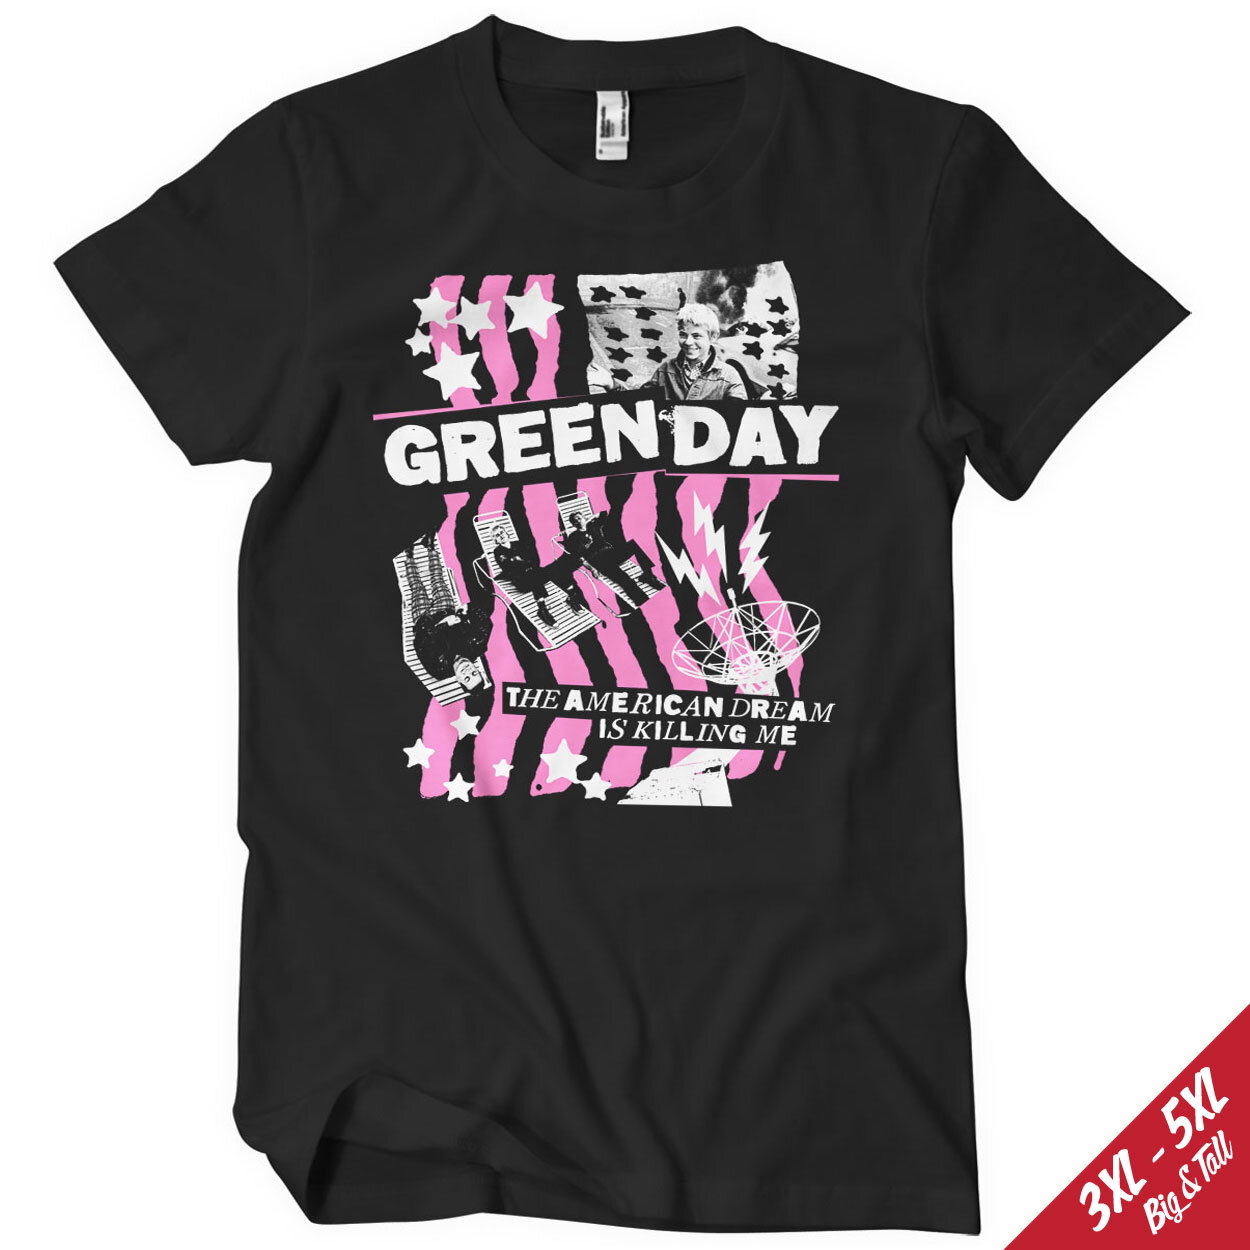 Green Day - American Dream Big & Tall T-Shirt